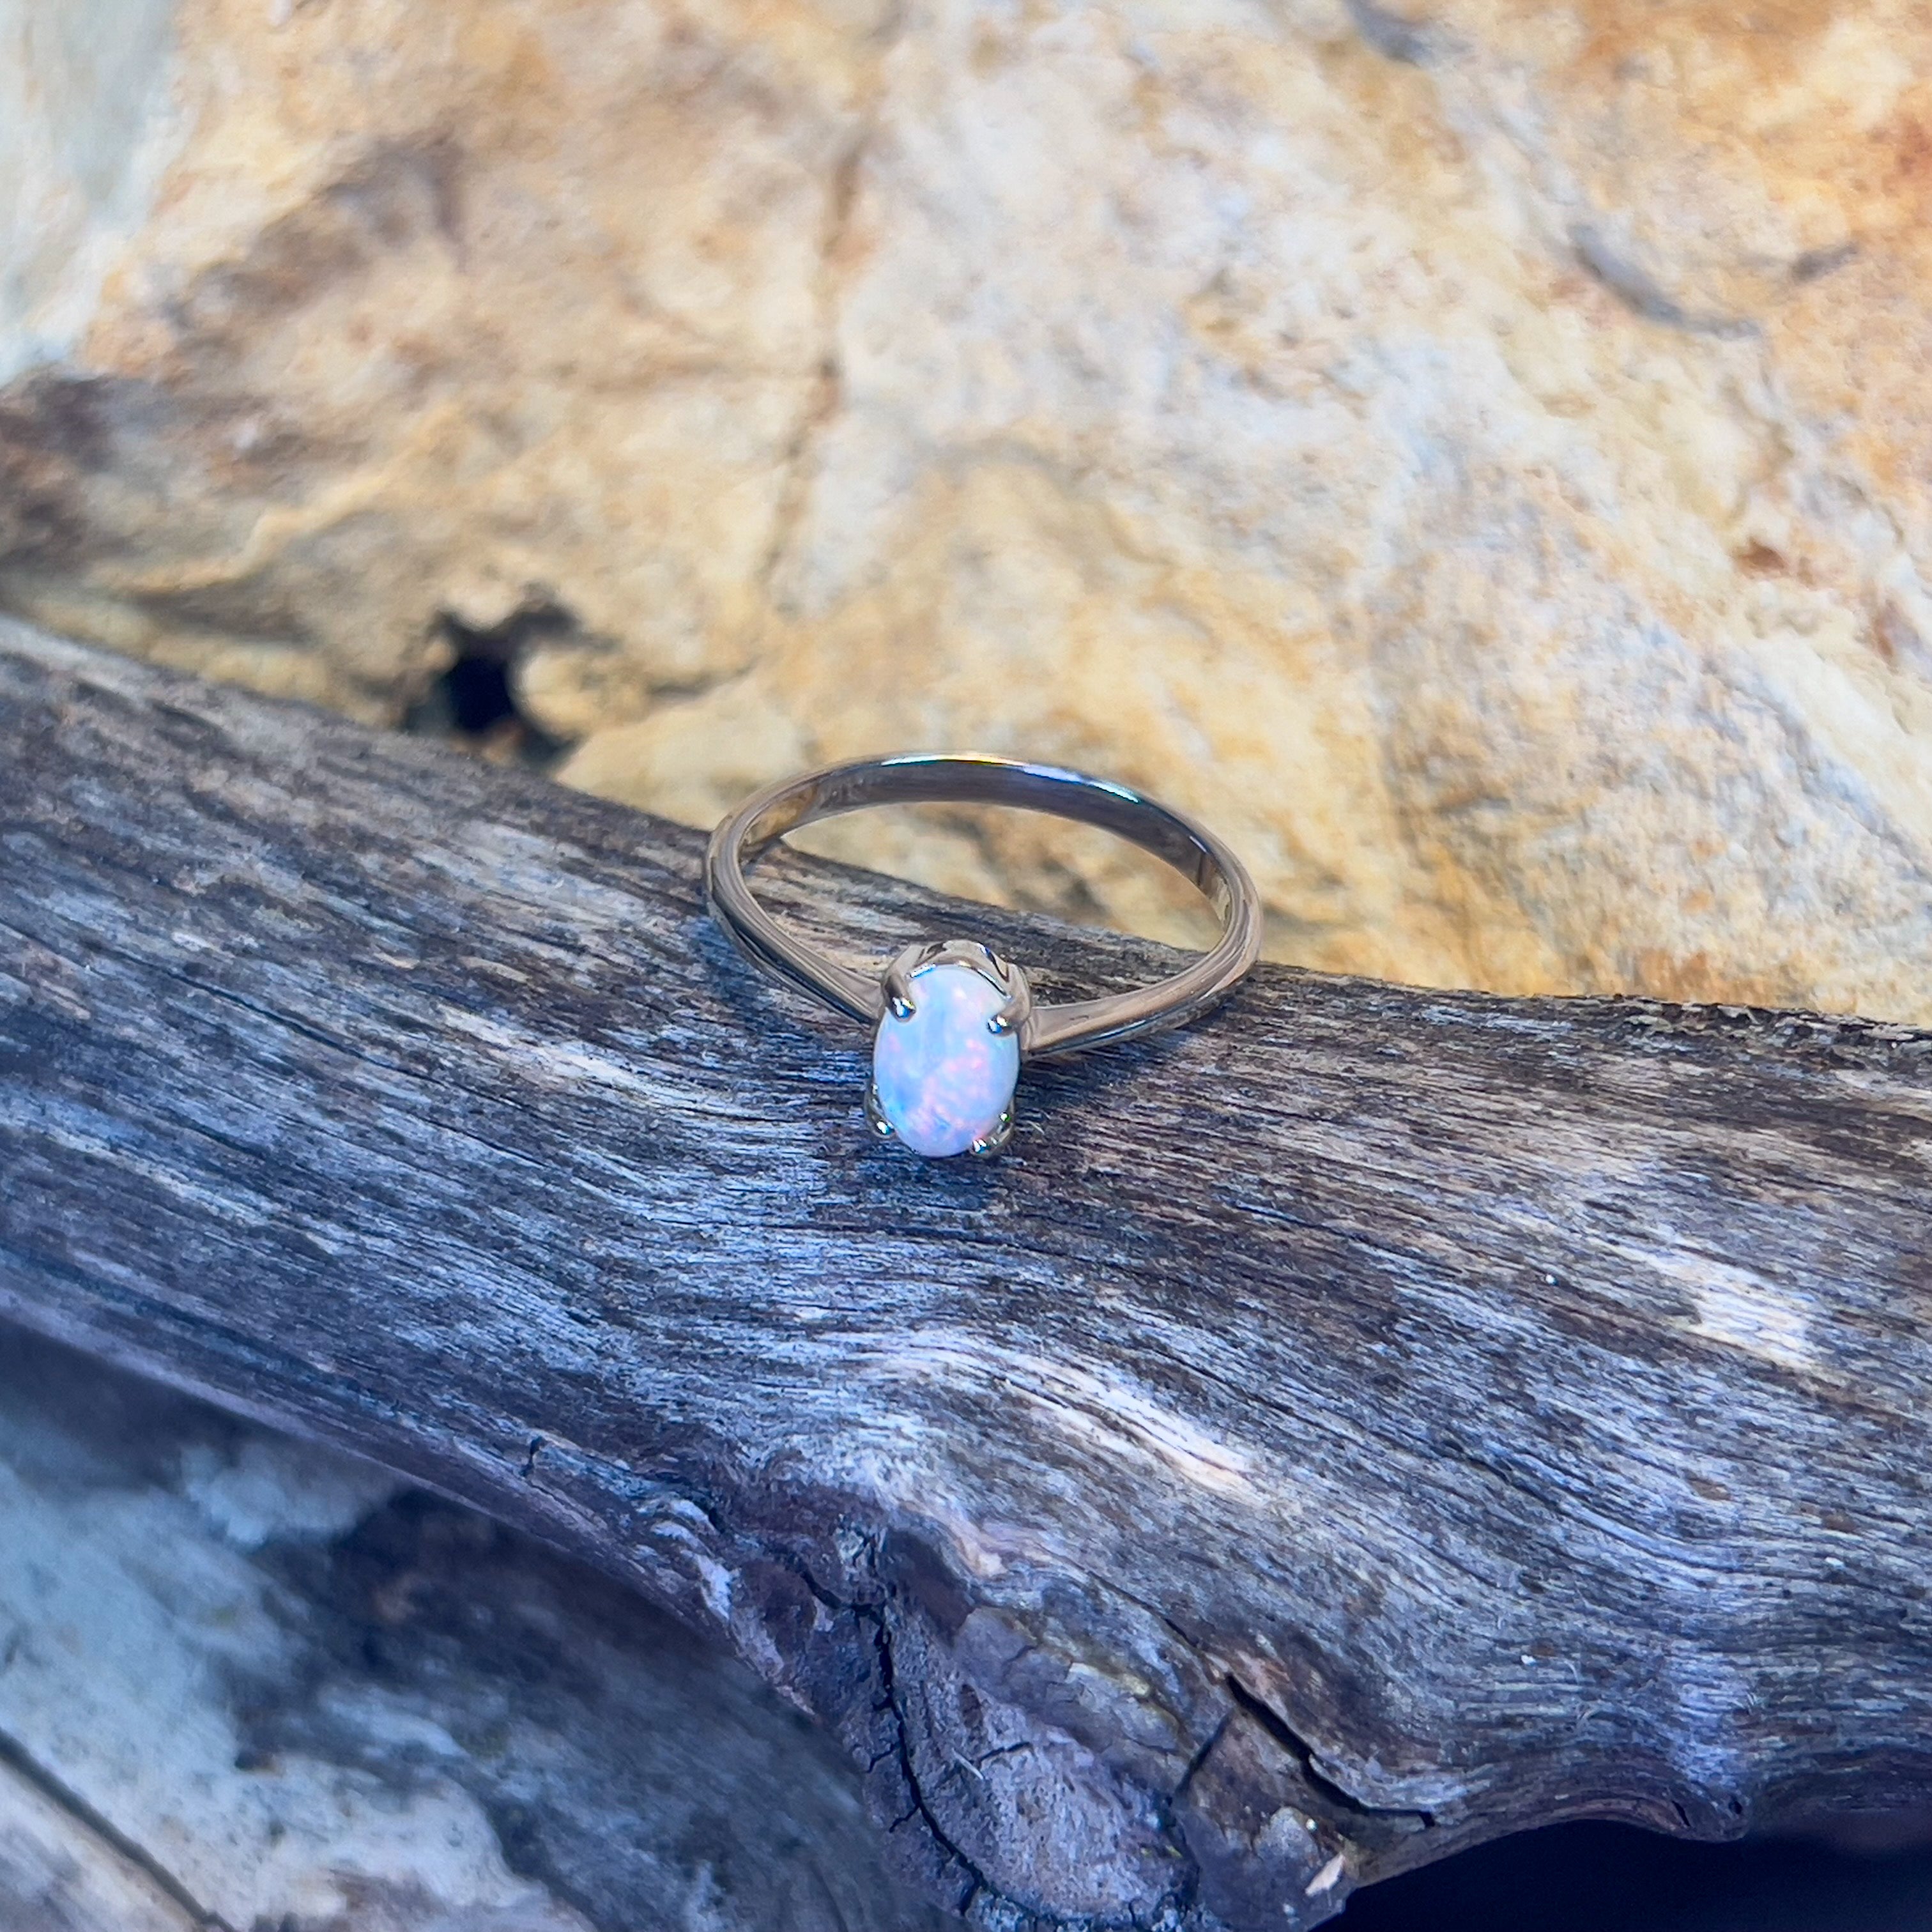 9kt White Gold solitaire White Opal 0.5ct ring - Masterpiece Jewellery Opal & Gems Sydney Australia | Online Shop